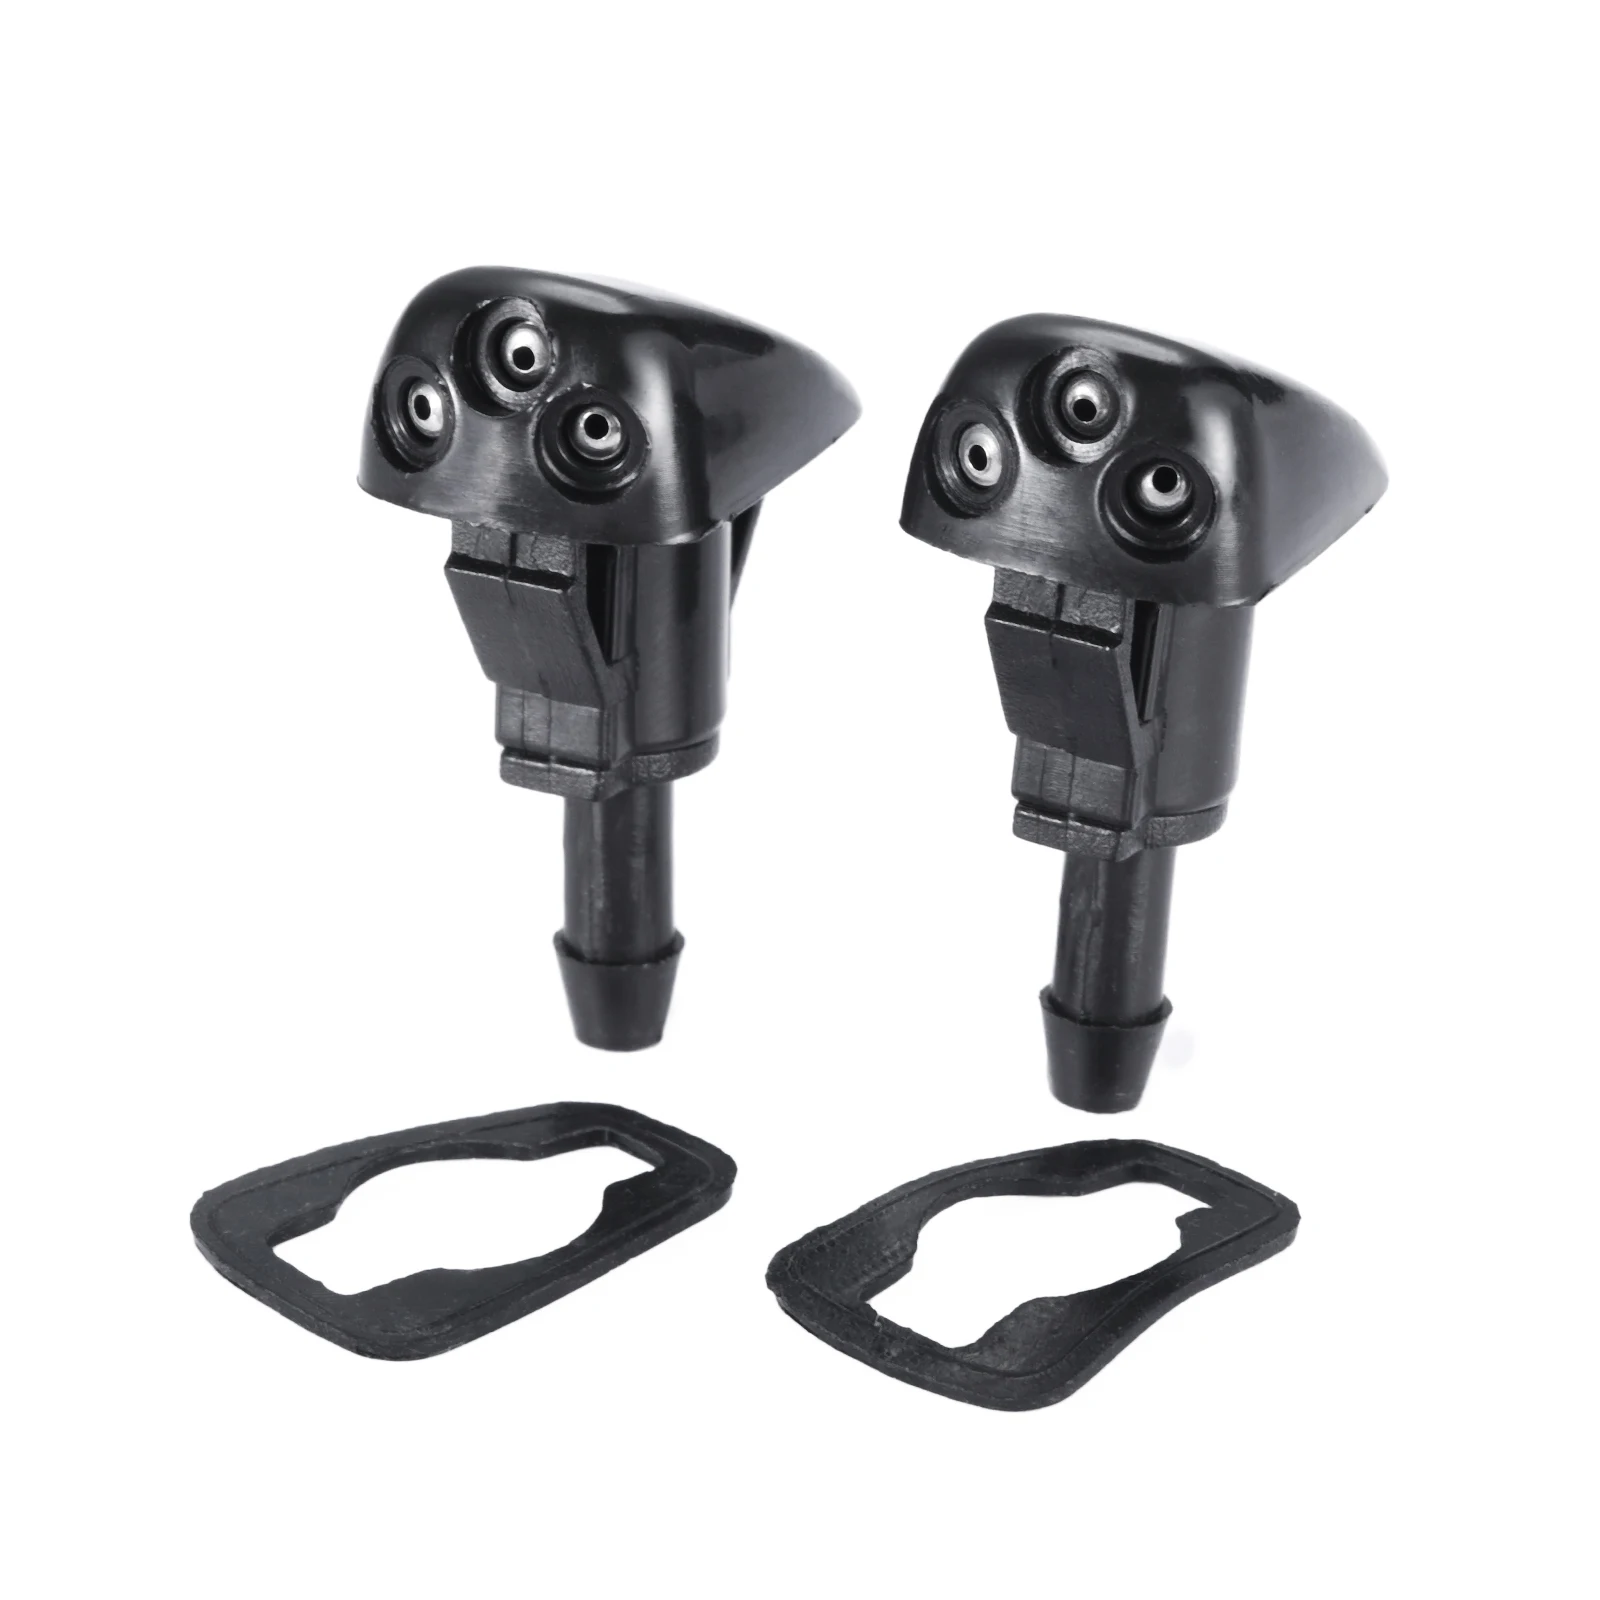 2Pcs Car Front Windshield Washer Nozzle Spray Jet Kit for Hyundai Kia - Replac - $13.23